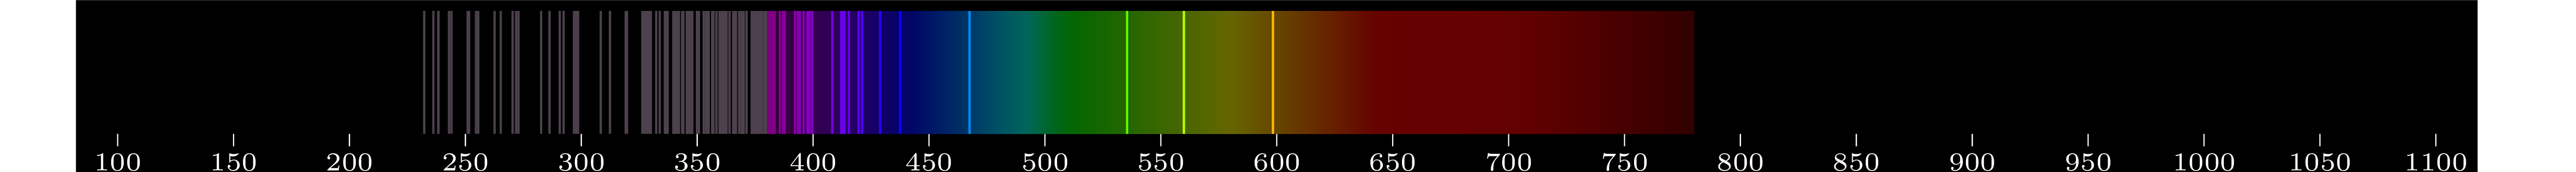 emmision spectra of element Rh